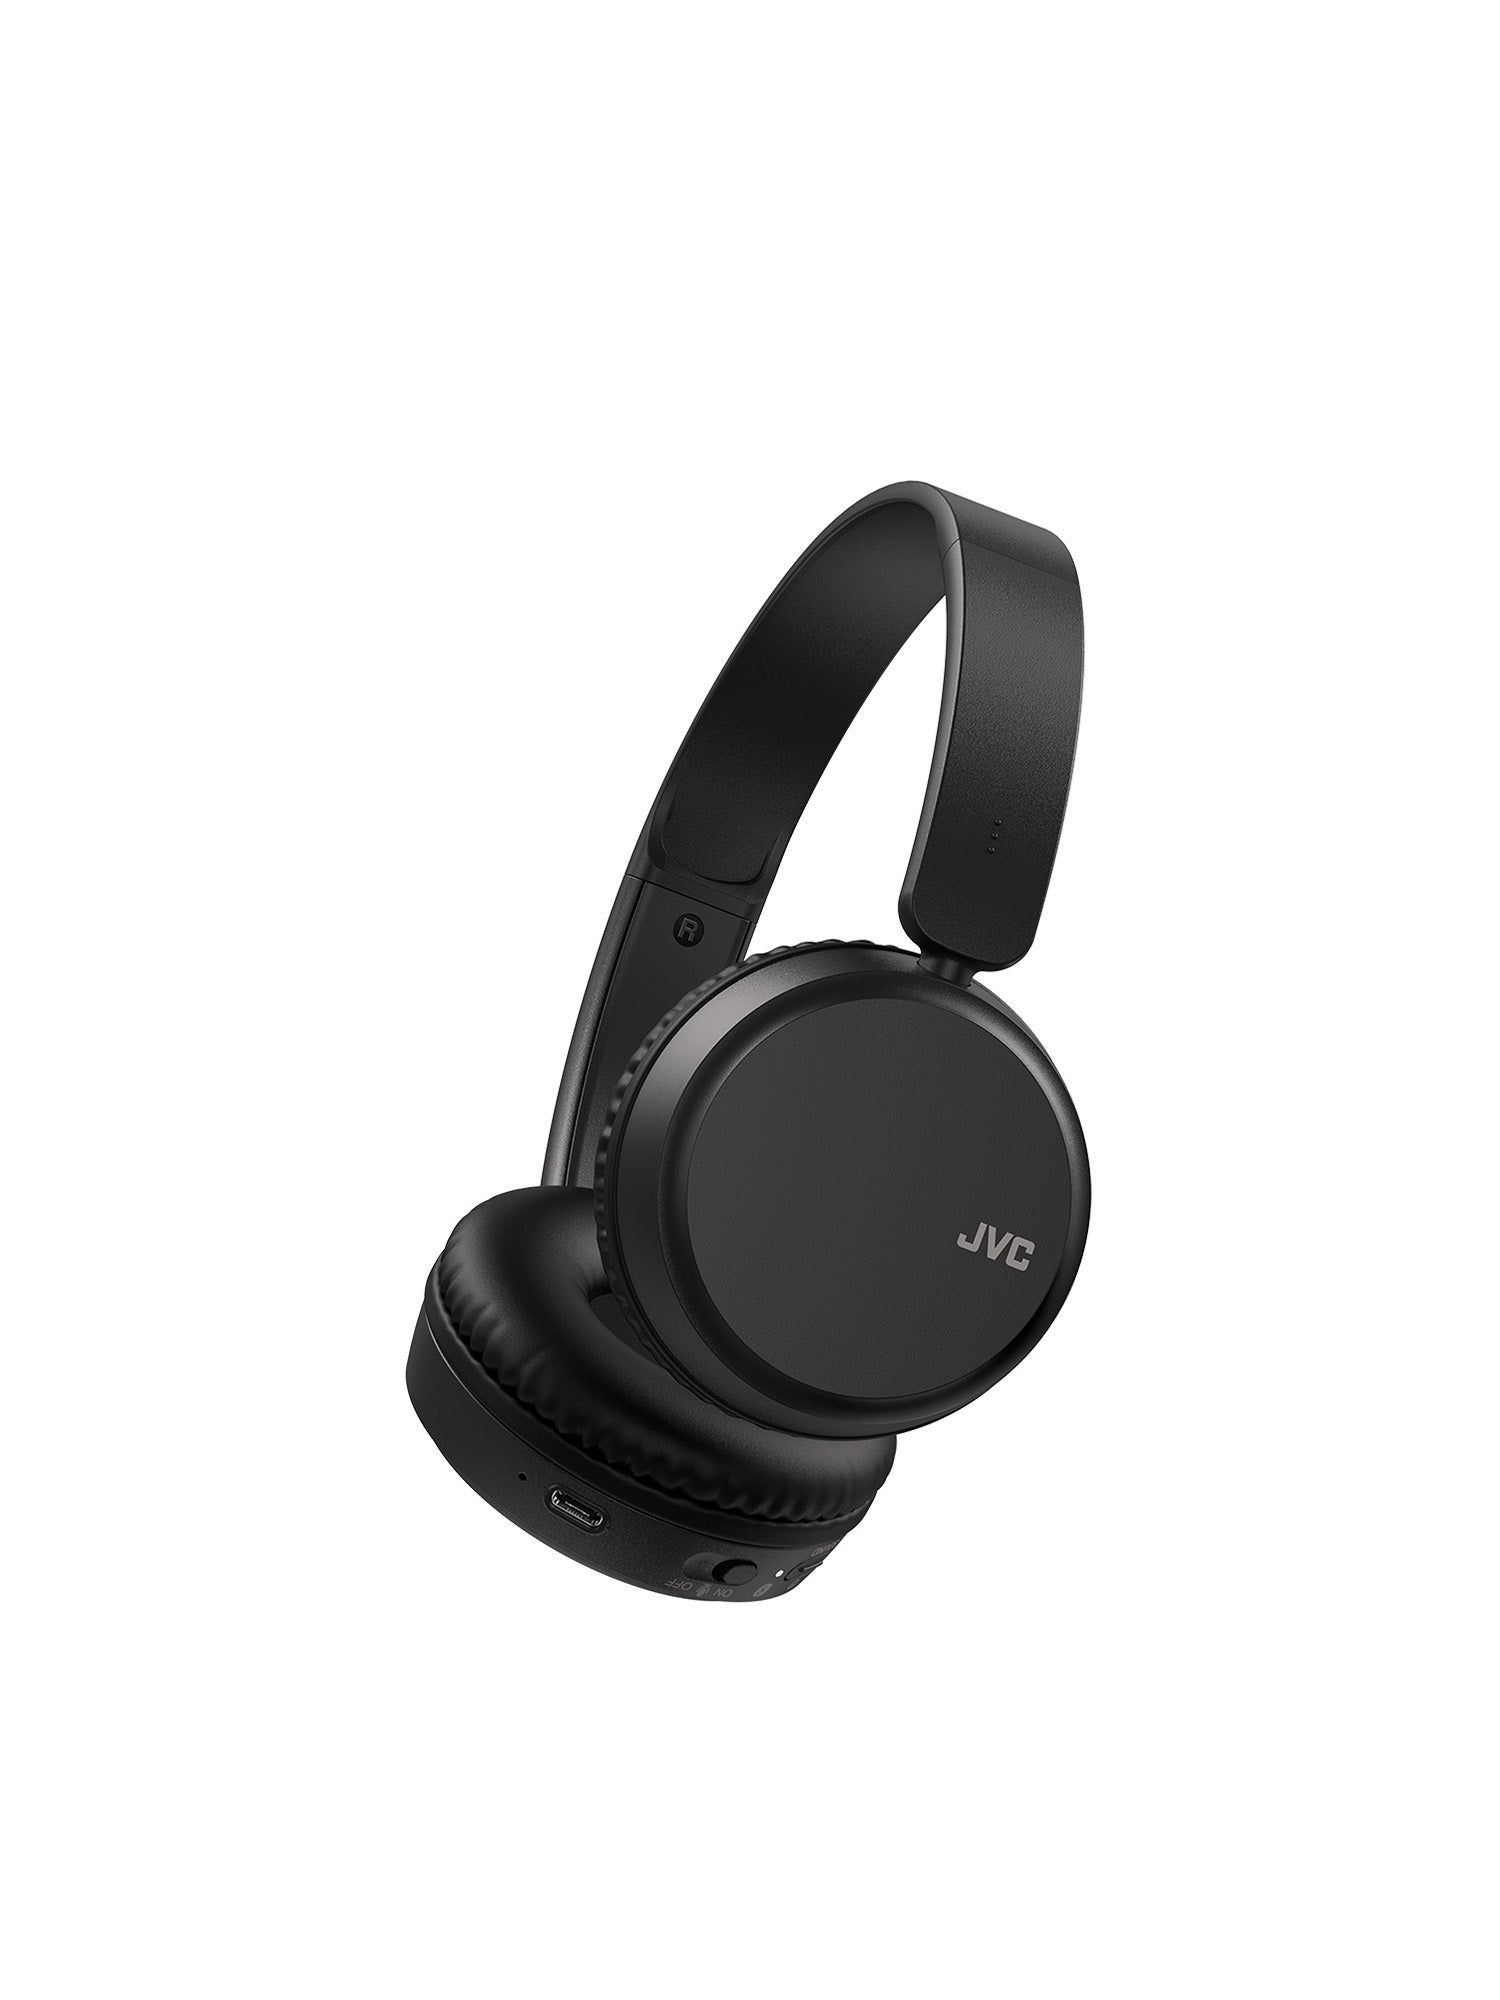 HA-S36W-B in black wireless bluetooth headphones